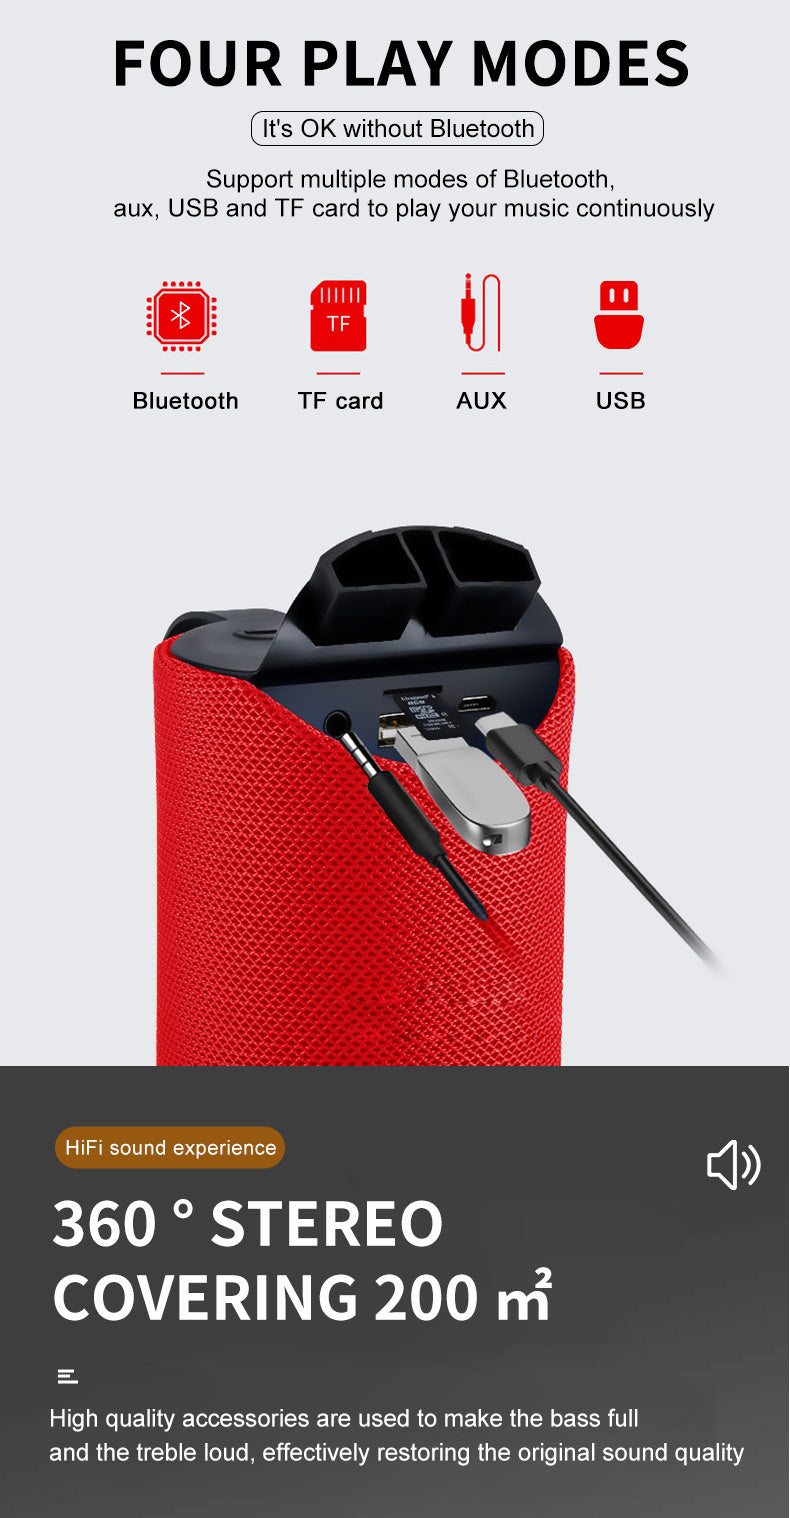 TG113 Mini Bluetooth Portable Speaker